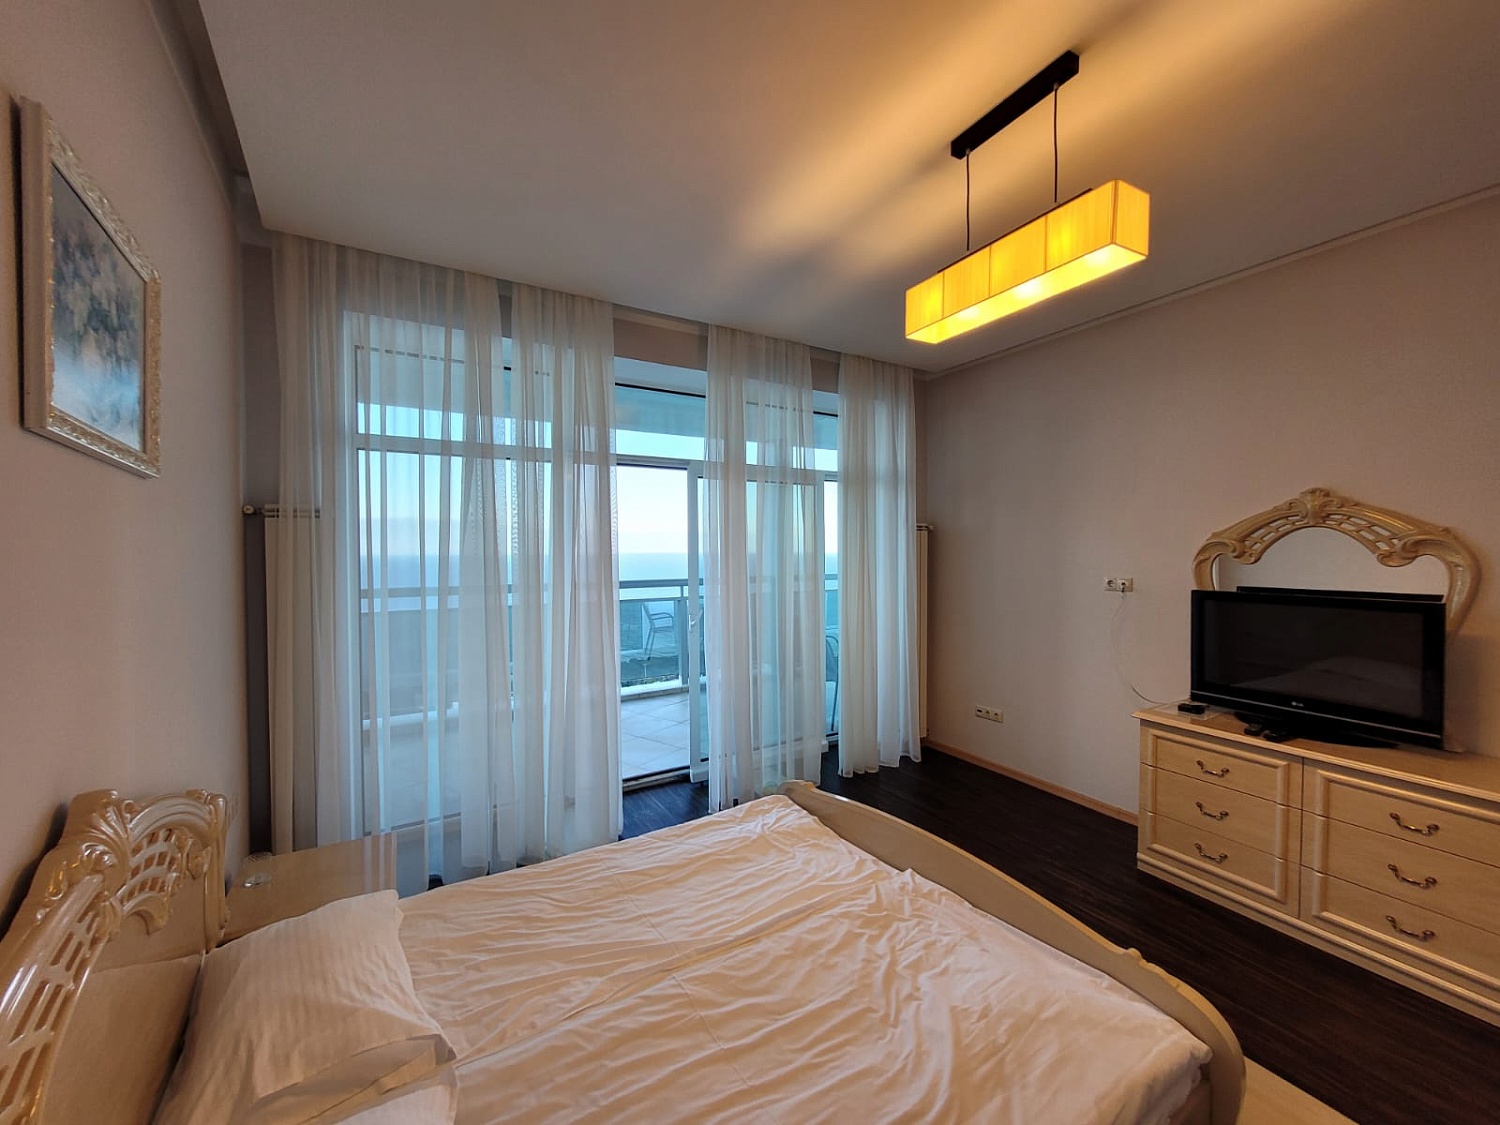 2-комнатная квартира с террасой и видом на море в ЖК "Respect Hall"